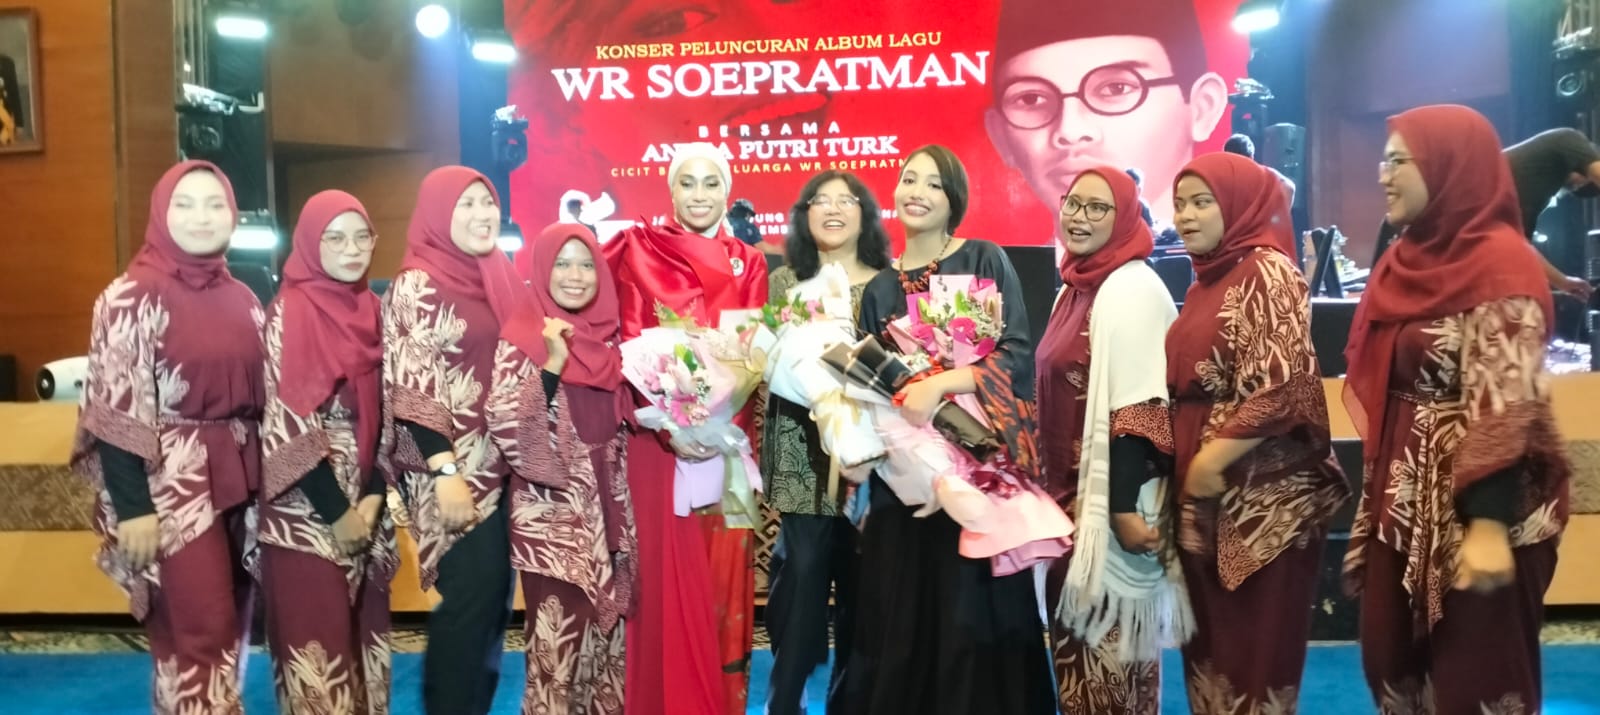 Konser Peluncuran Lagu WR Soepratman Antea Putri Turk sebagai Duta keluarga sang pencipta lagu kebangsaan Indonesia Raya